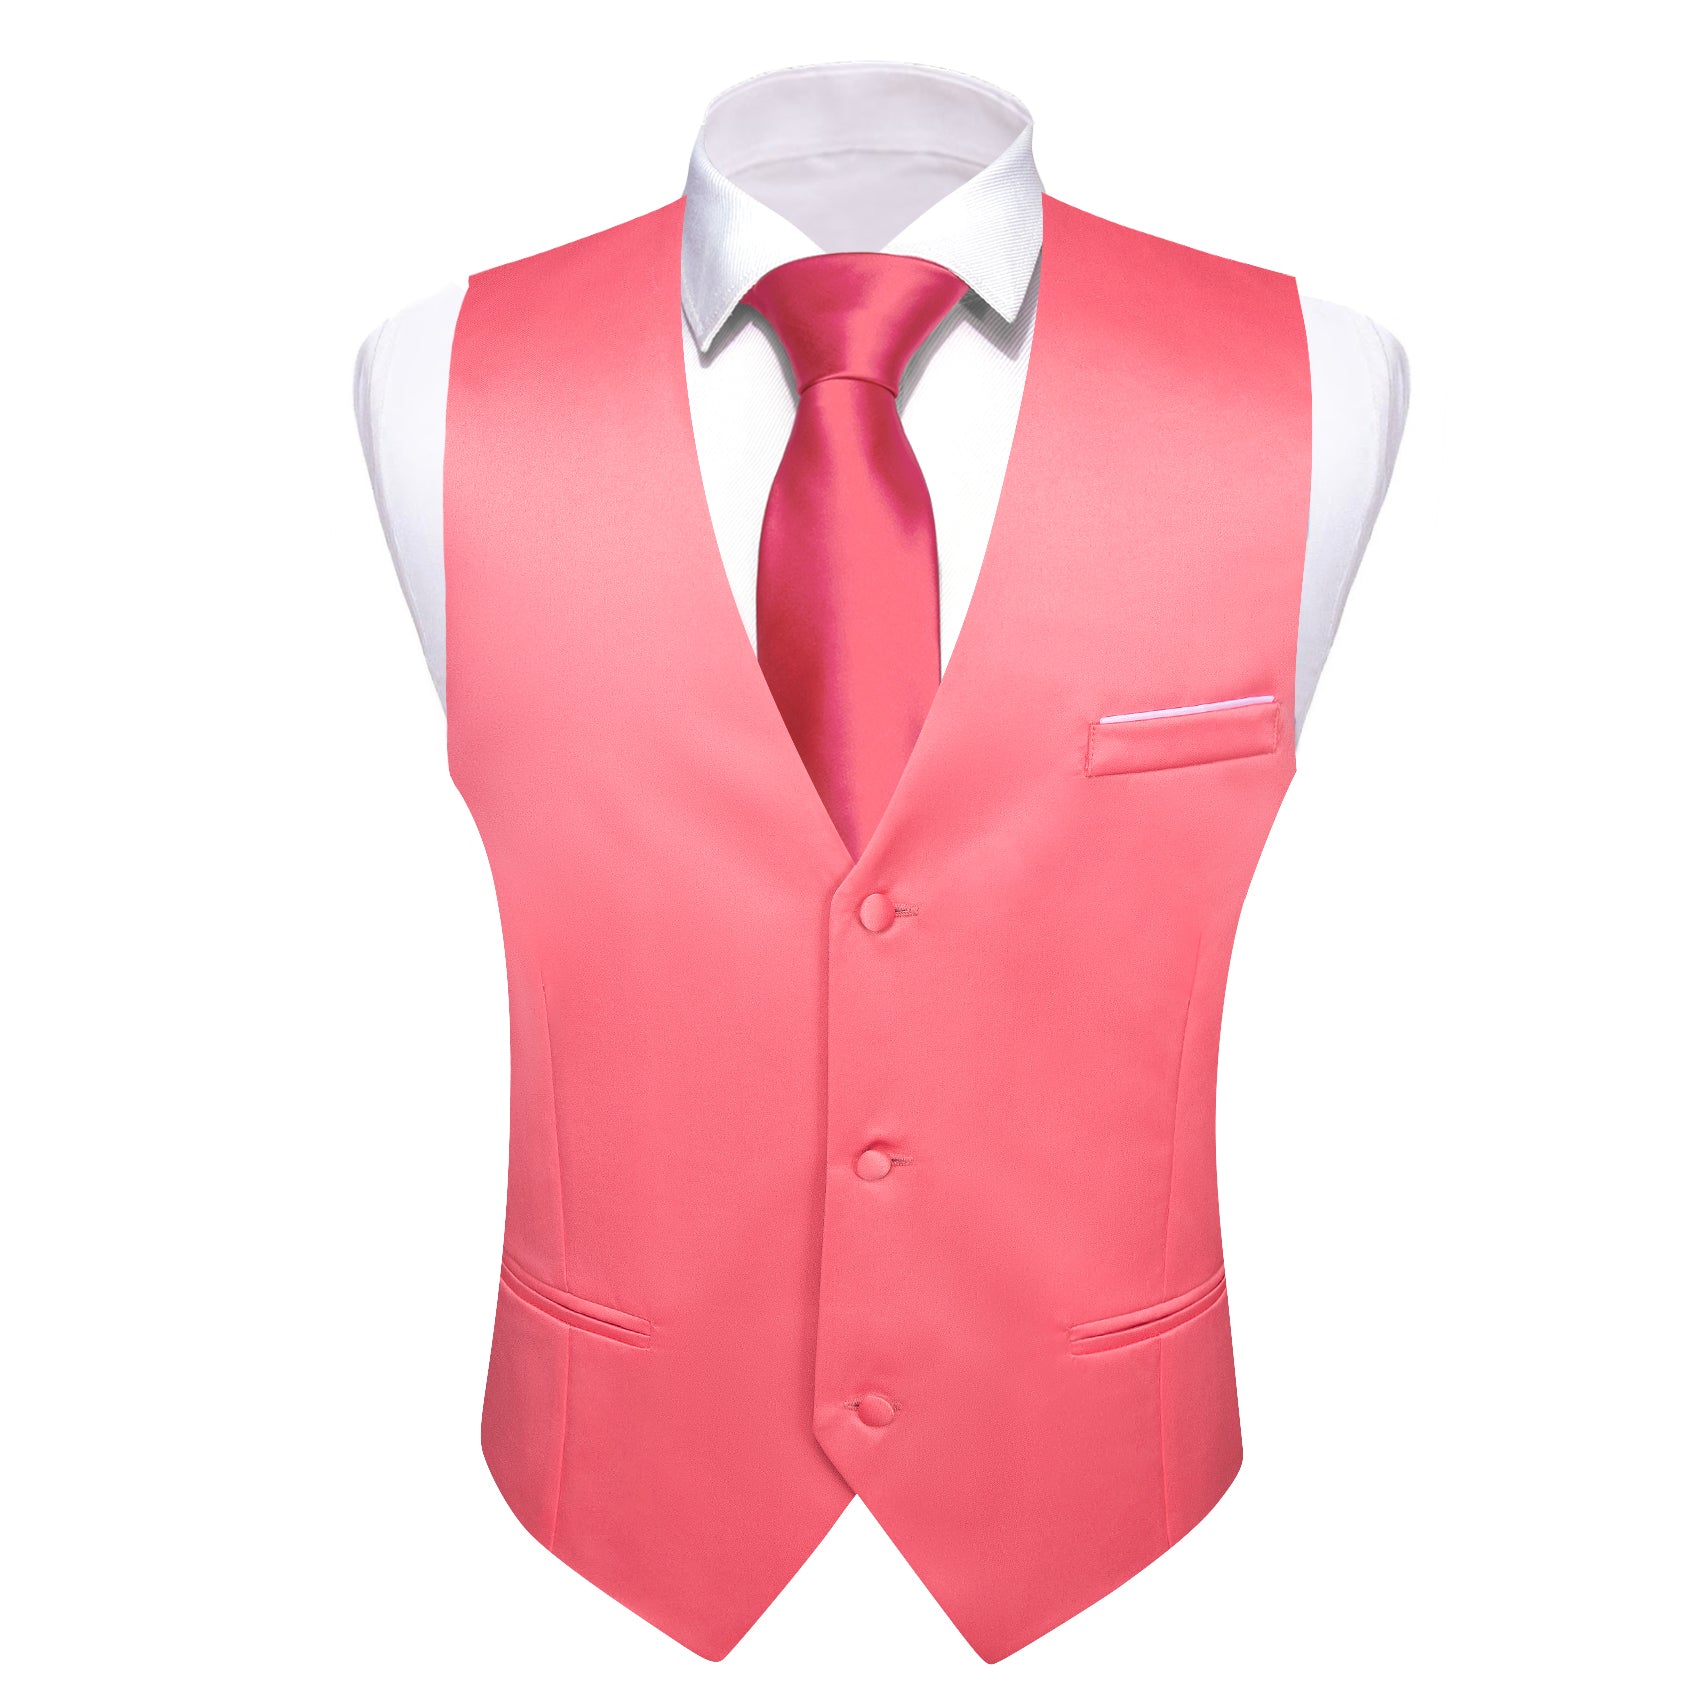 Barry.wang Shock Pink Solid Business Vest Suit